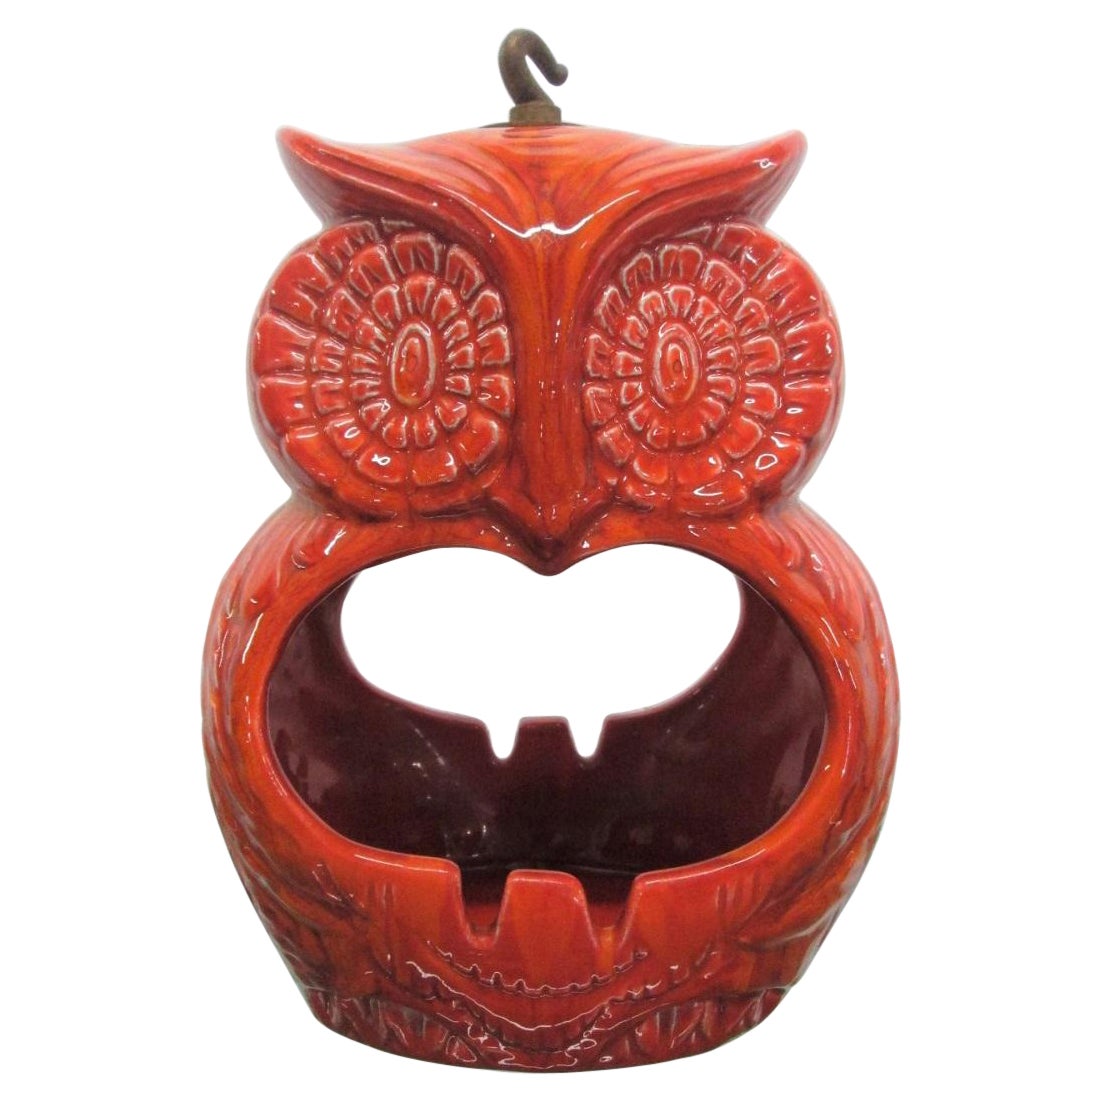 Mid-Century Modern Ceramic Hanging Owl Ashtray